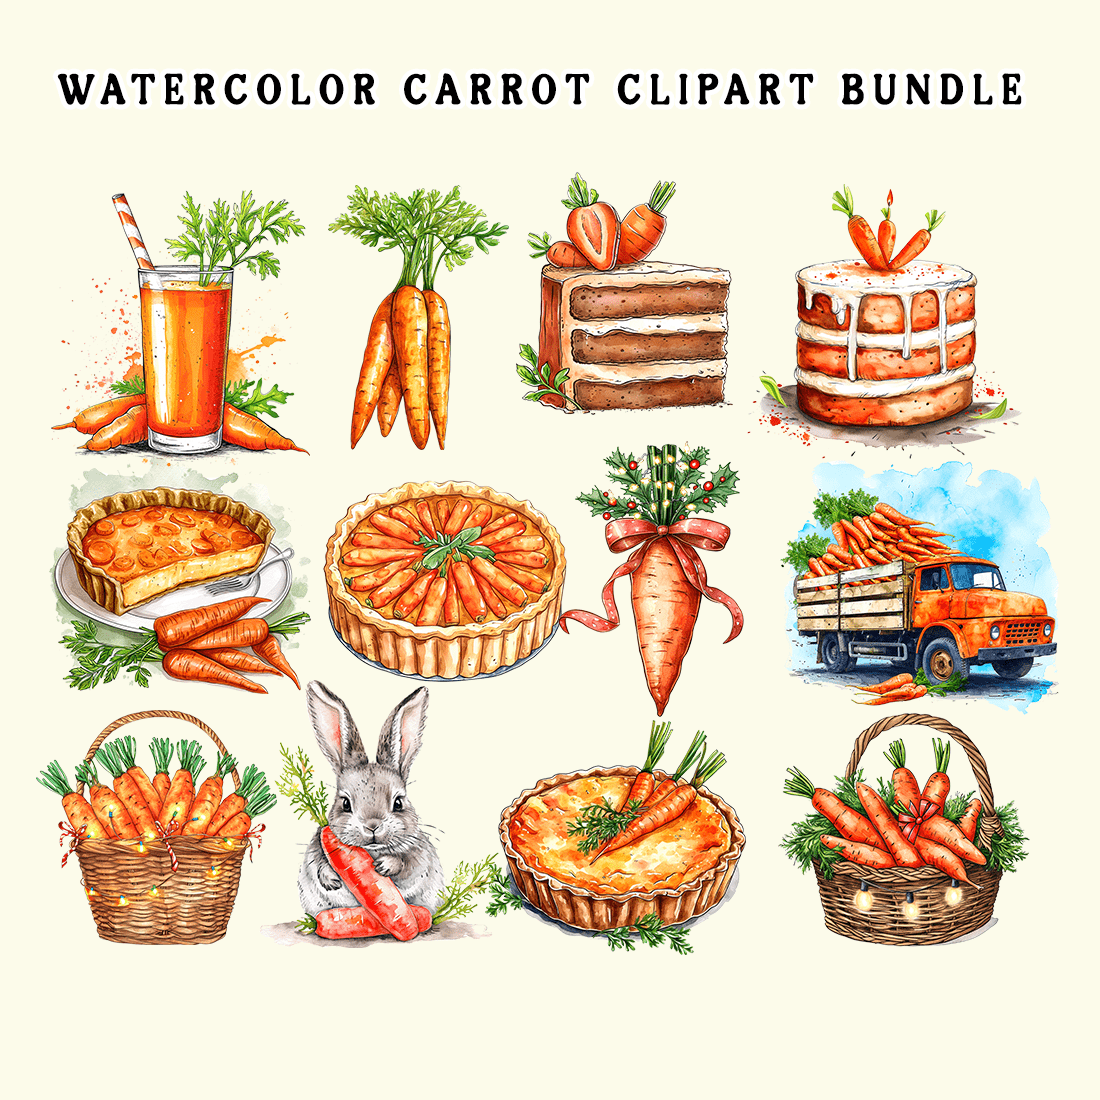 Watercolor Carrot Clipart Bundle preview image.